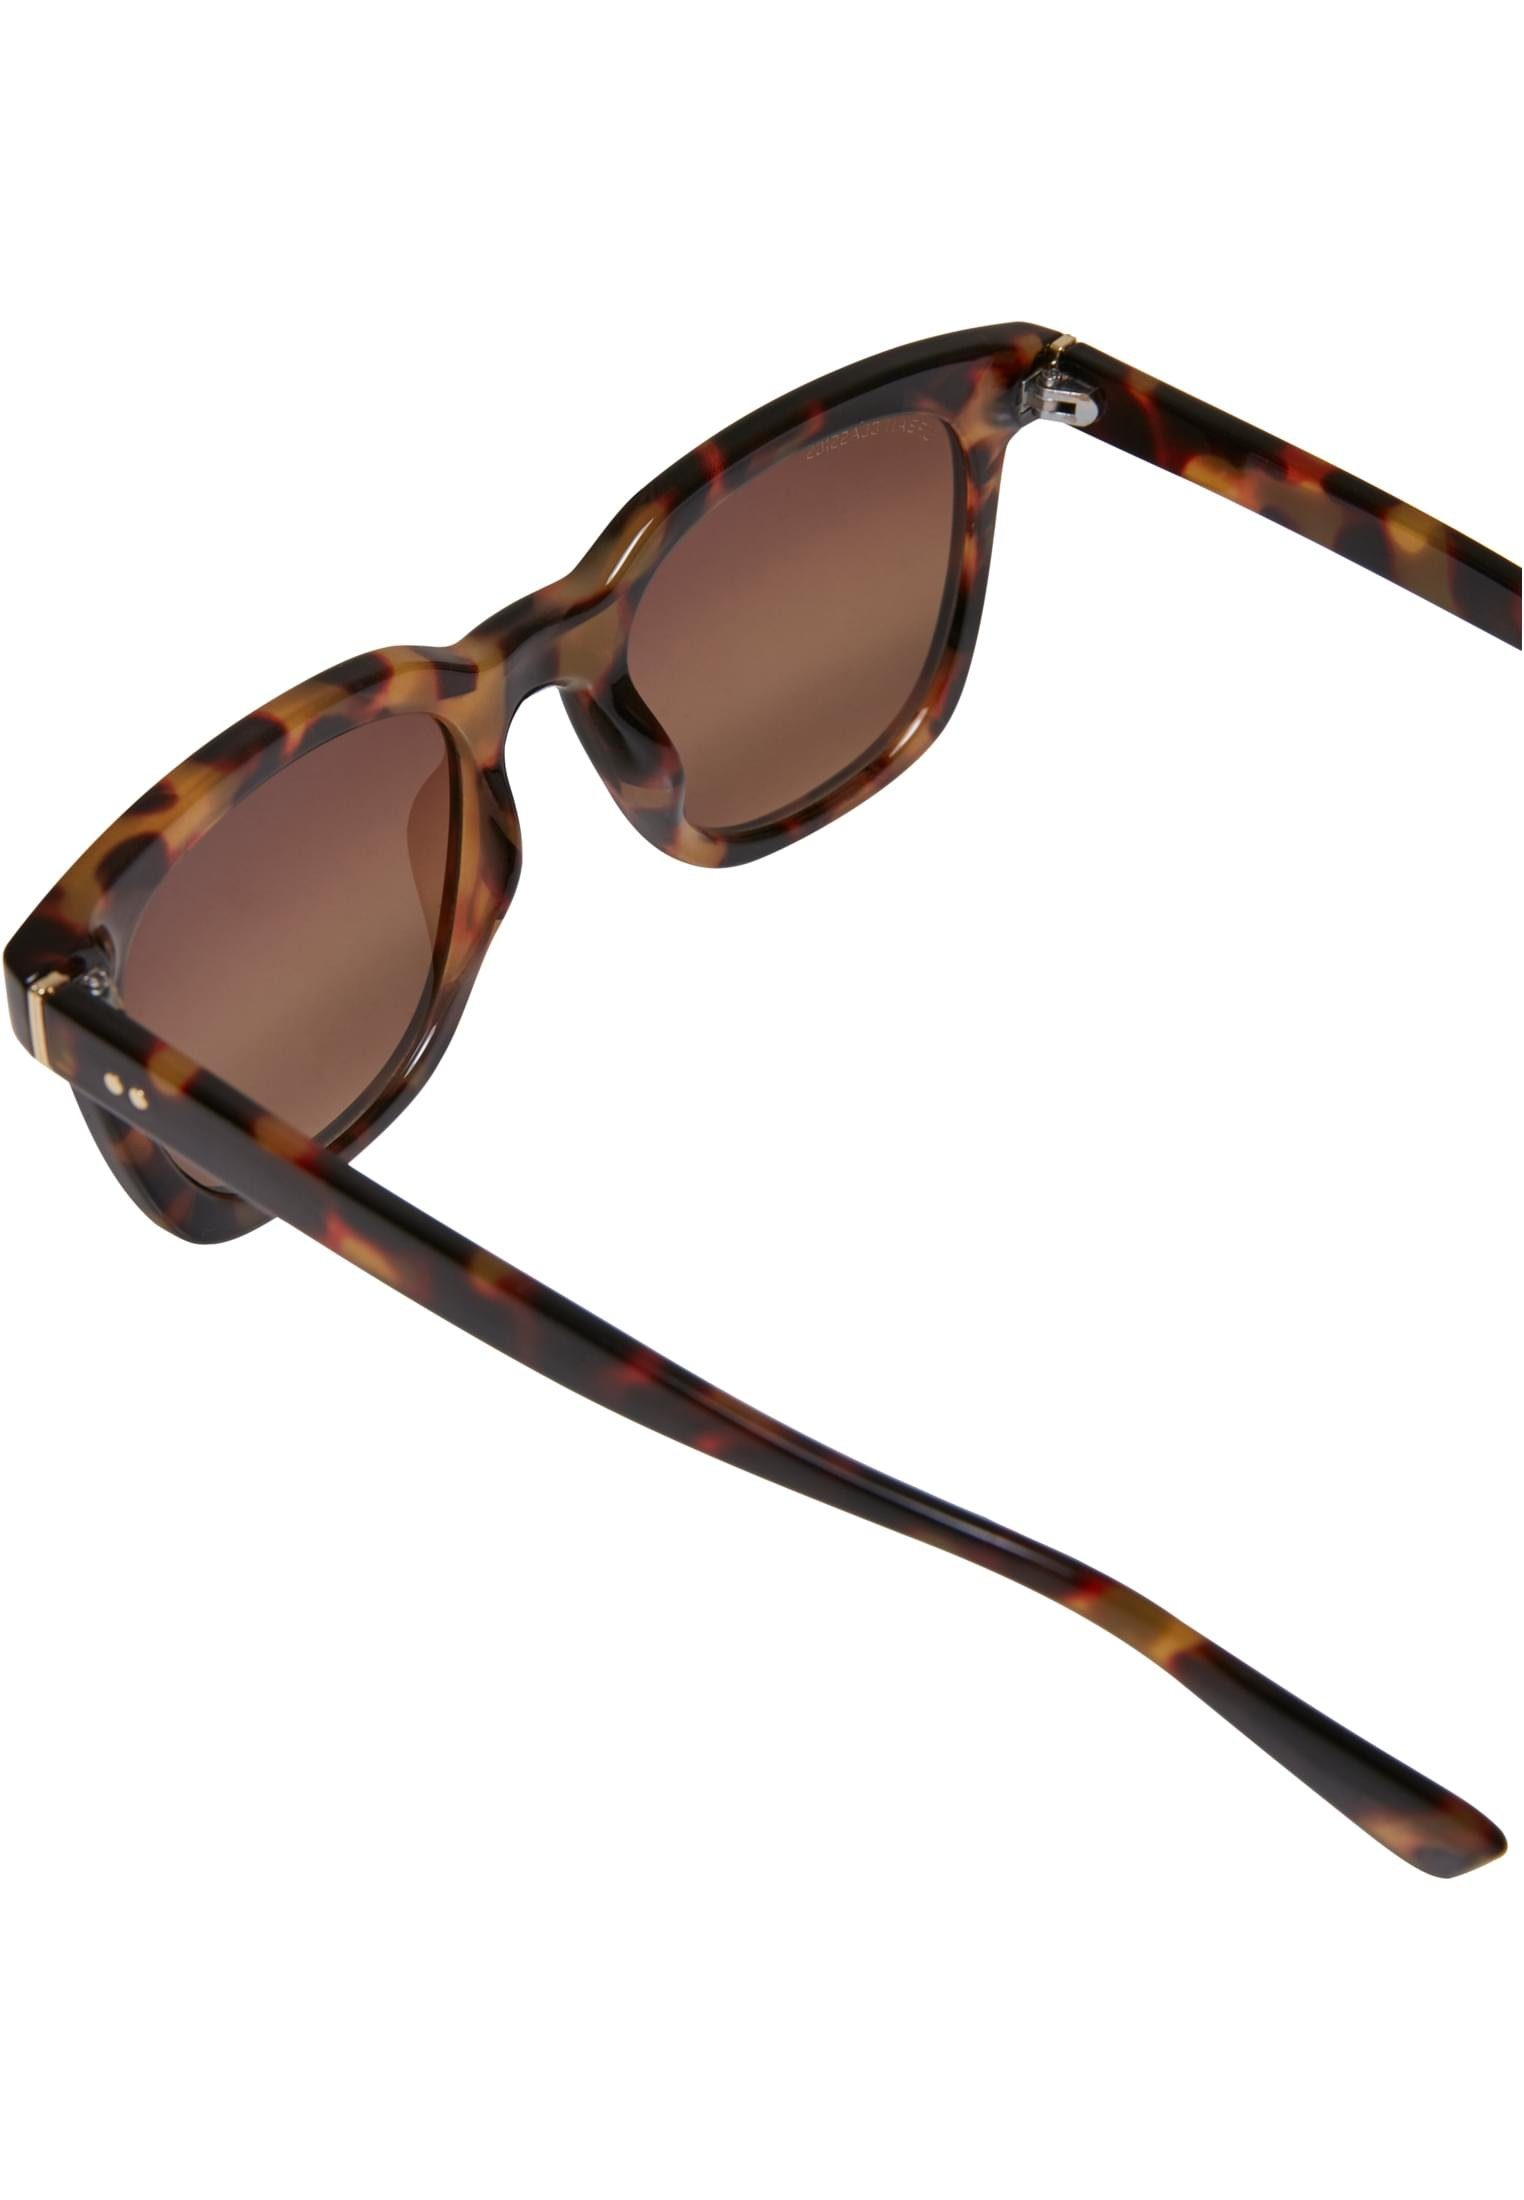 Unisex CLASSICS Naples amber/brown URBAN Sonnenbrille Sunglasses